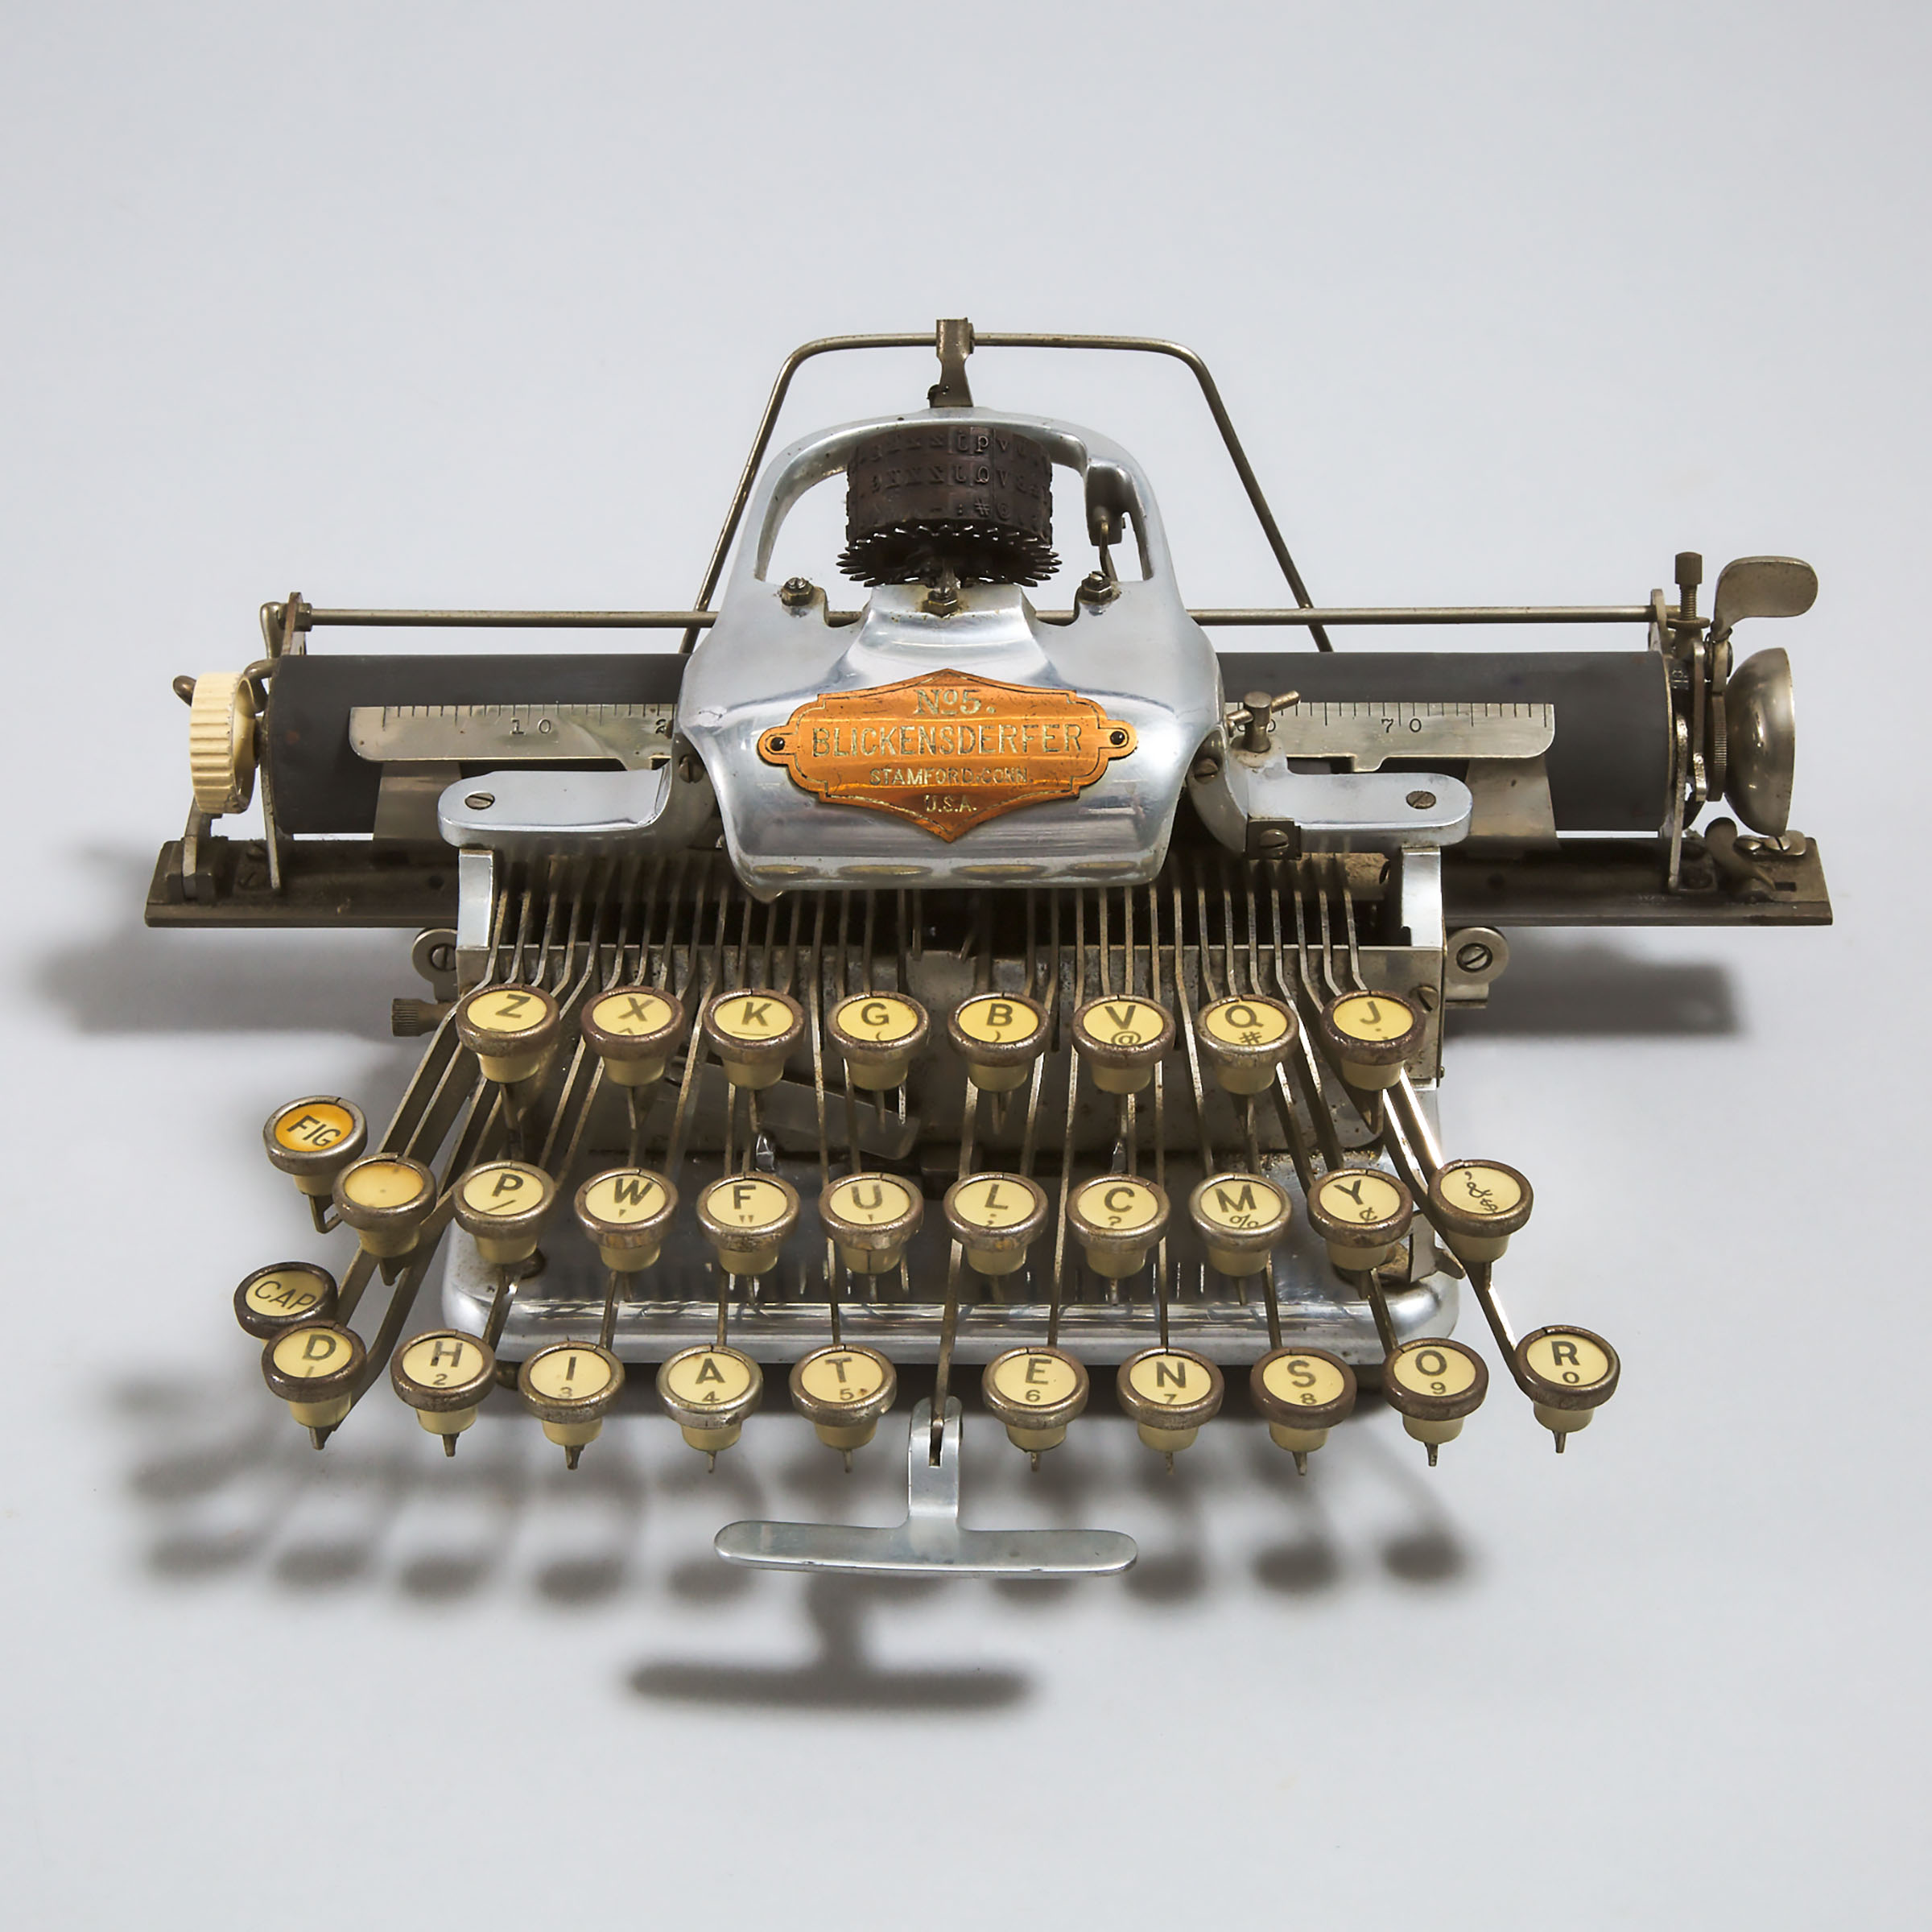 American Blickensderfer No. 5 Typewriter, Stamford, CT., c.1900